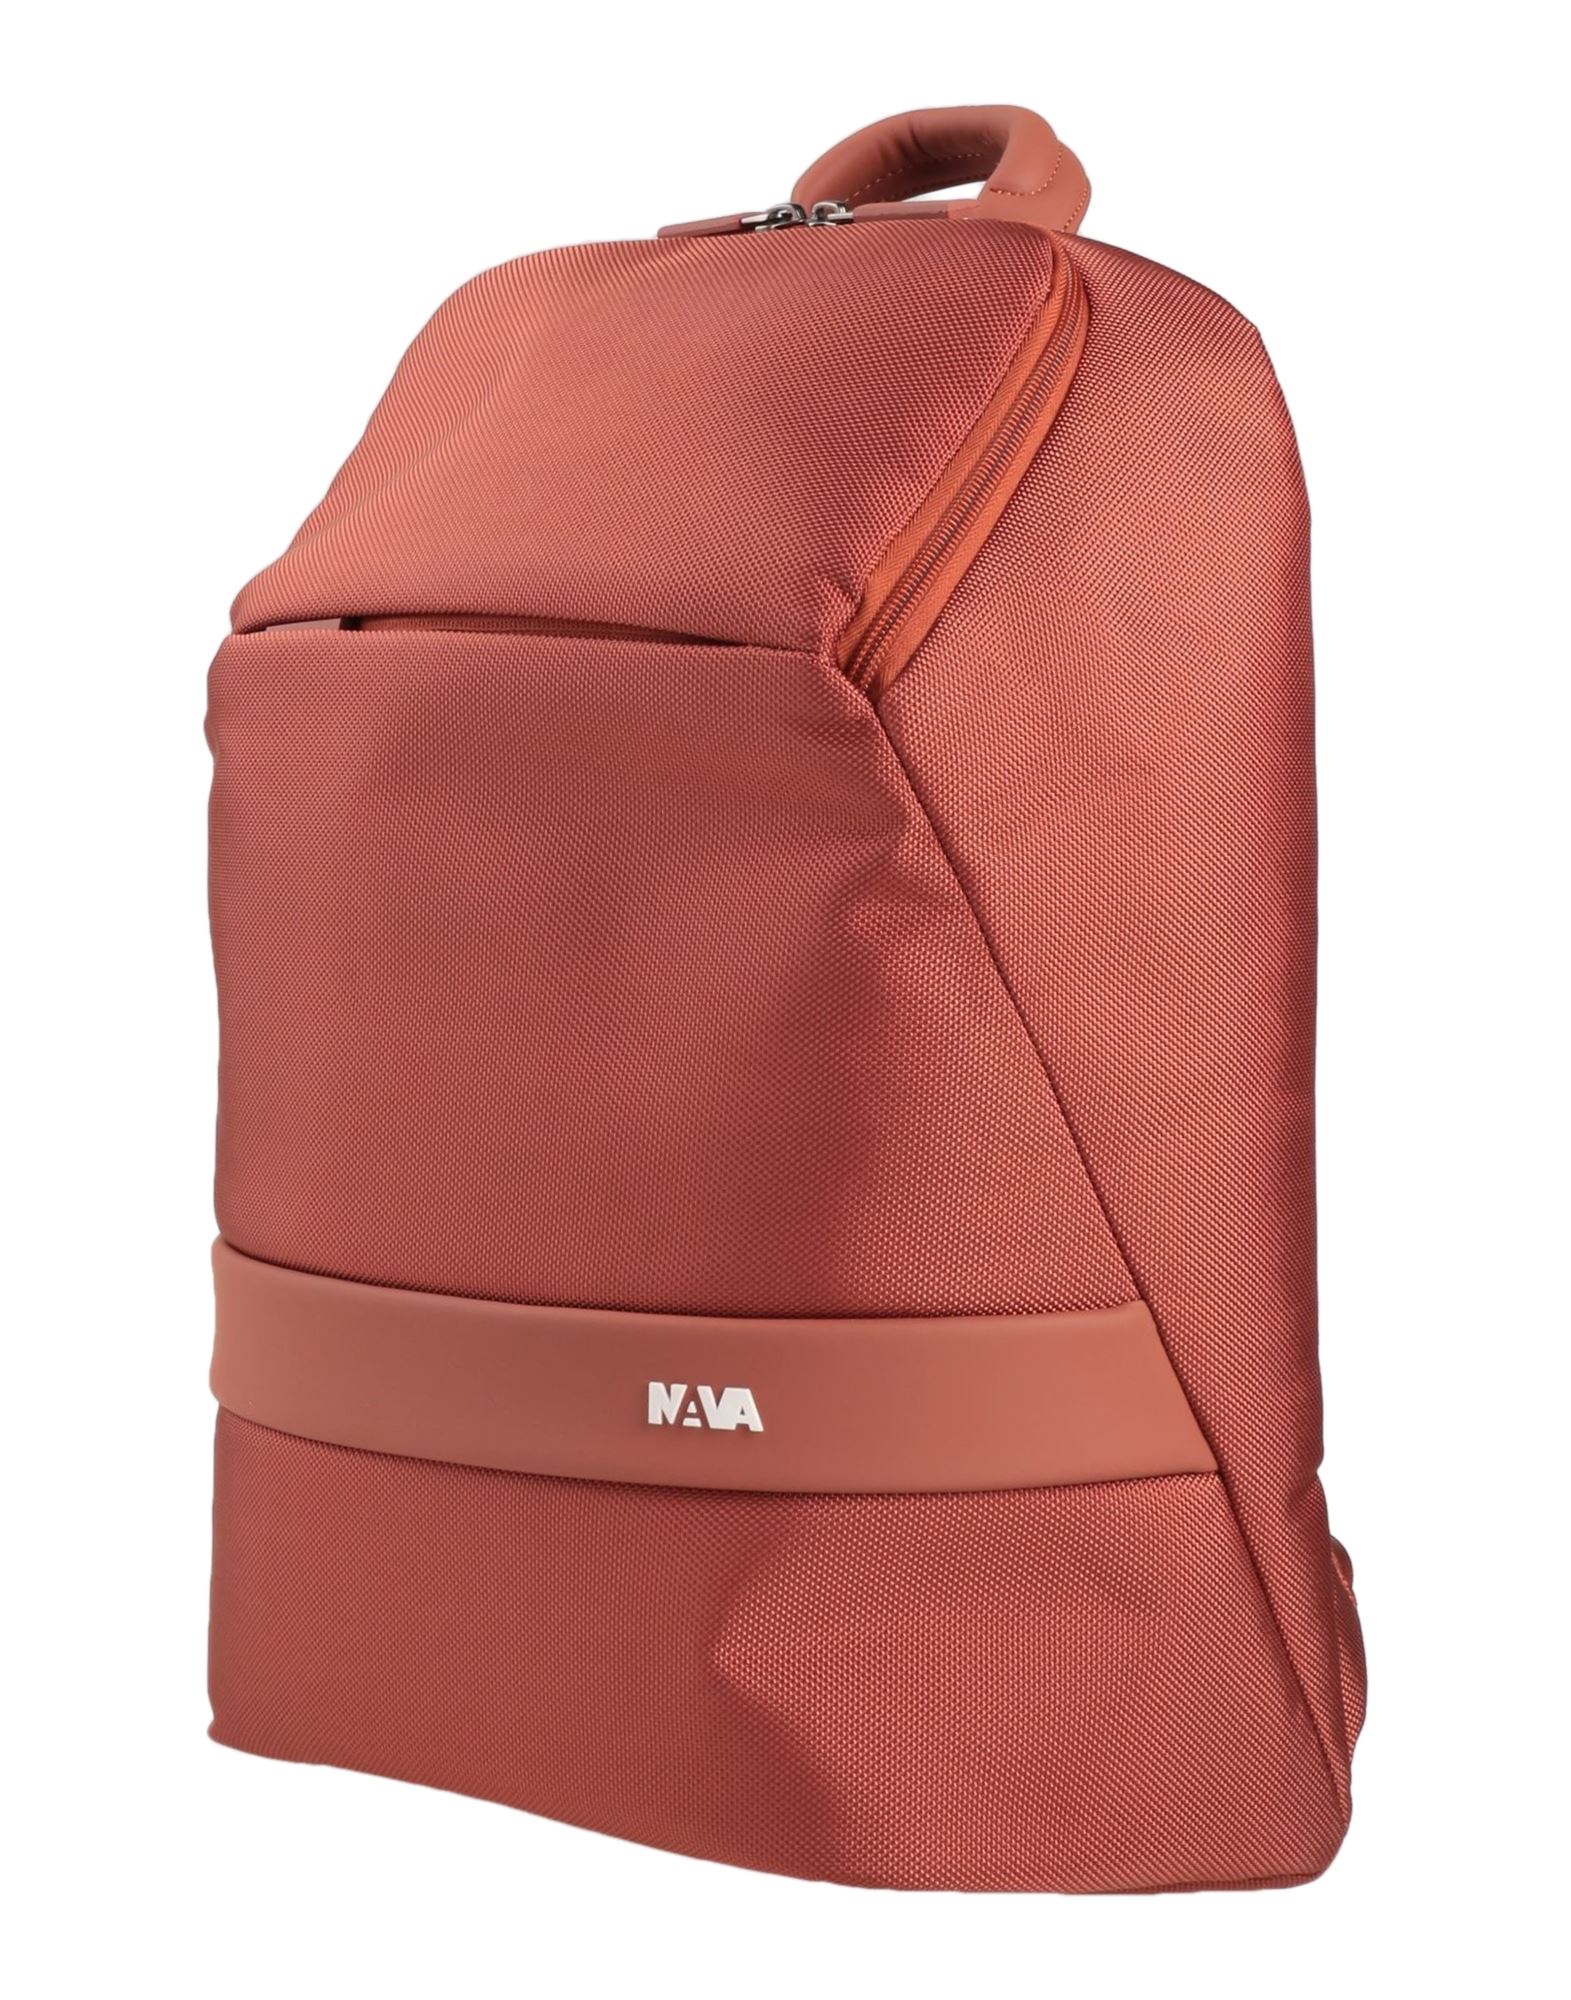 Nava Backpacks In Tan